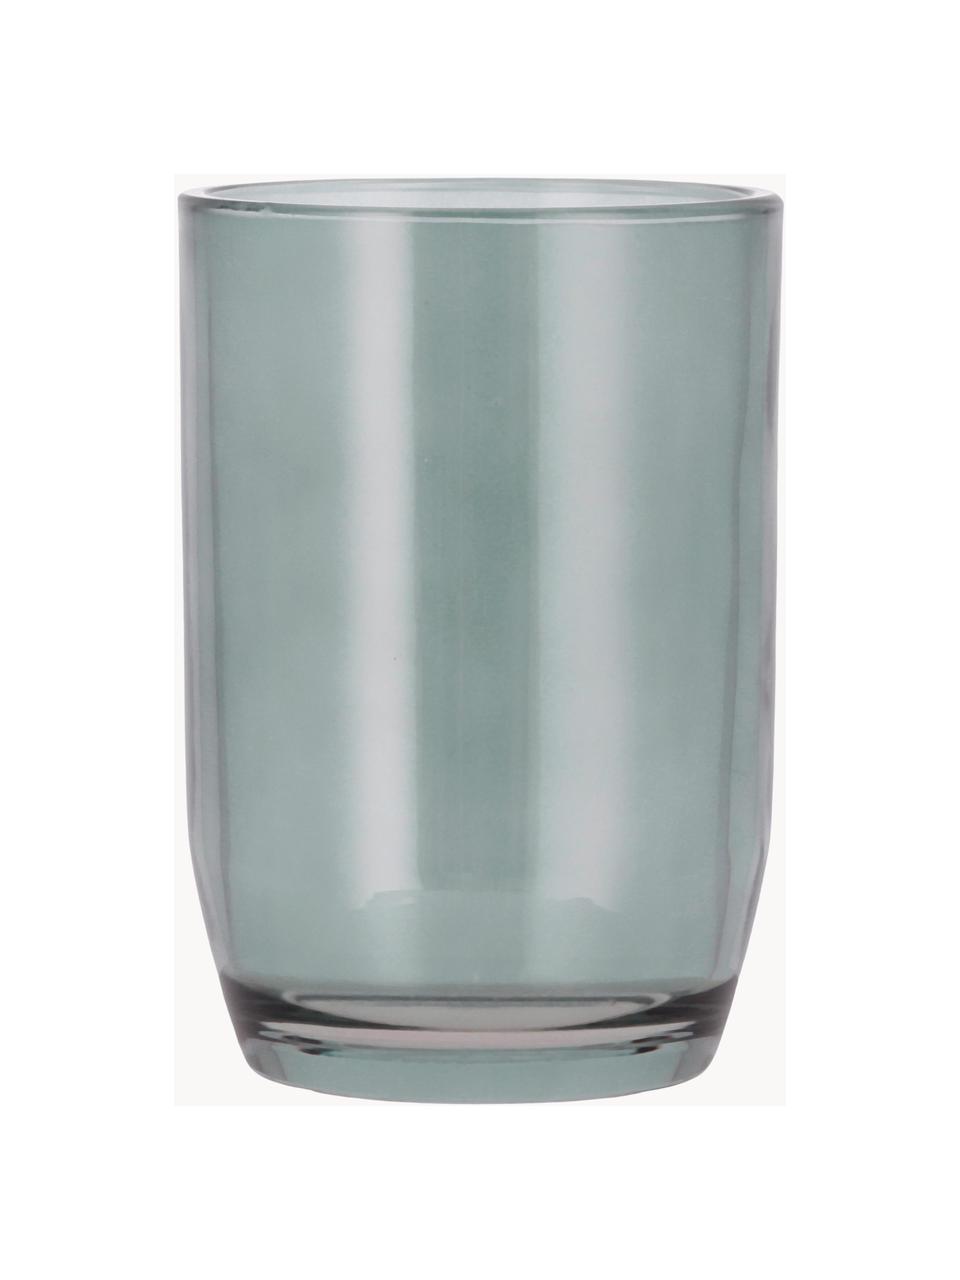 Zahnputzbecher Vintage aus Glas, Glas, Blaugrau, Ø 8 x H 11 cm